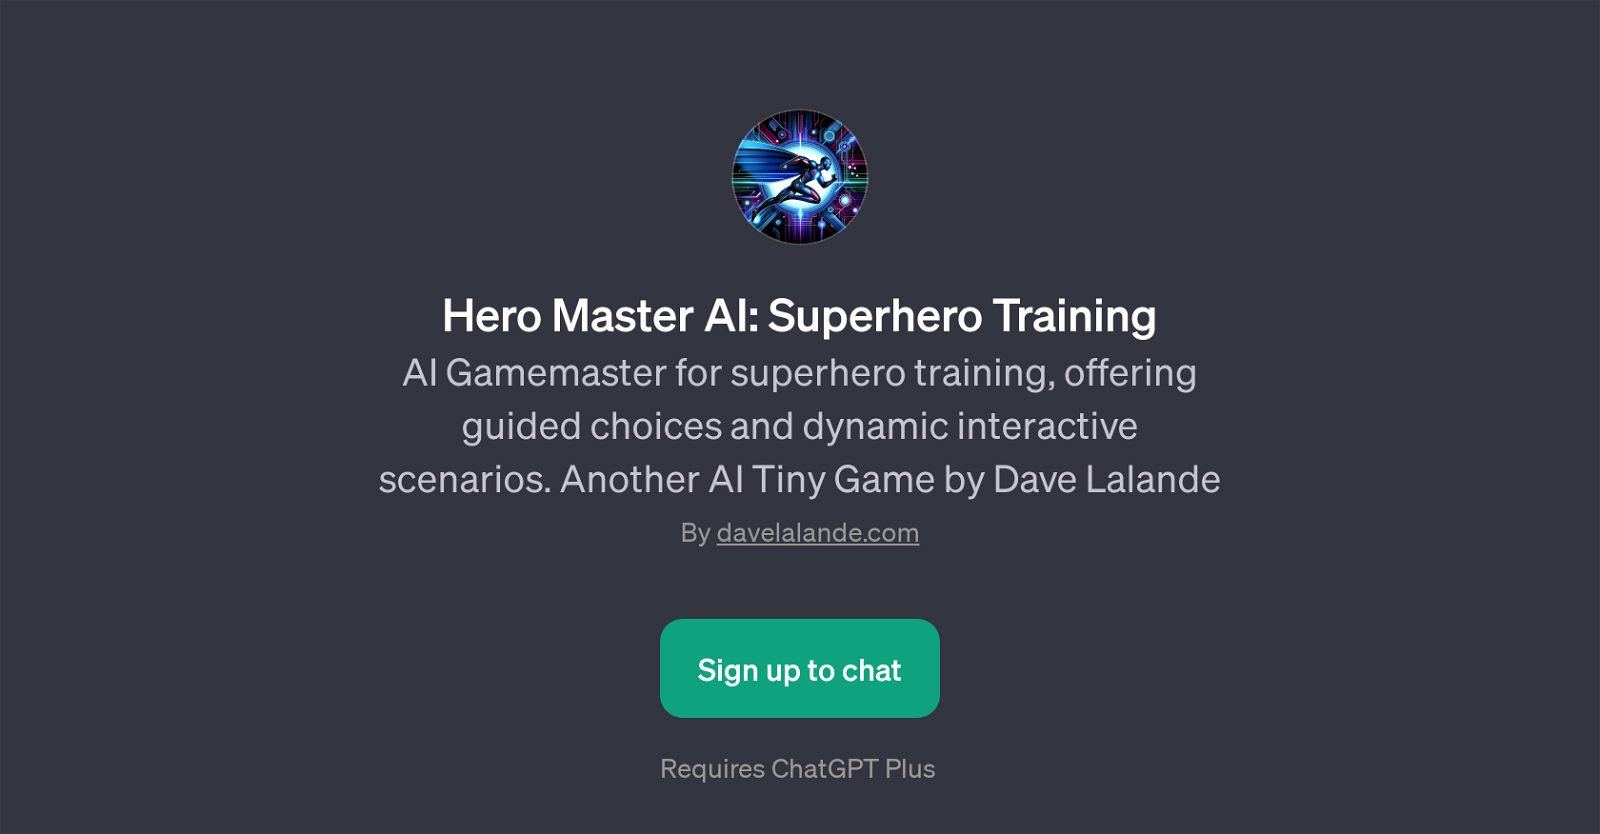 Hero Master AI: Superhero Training website